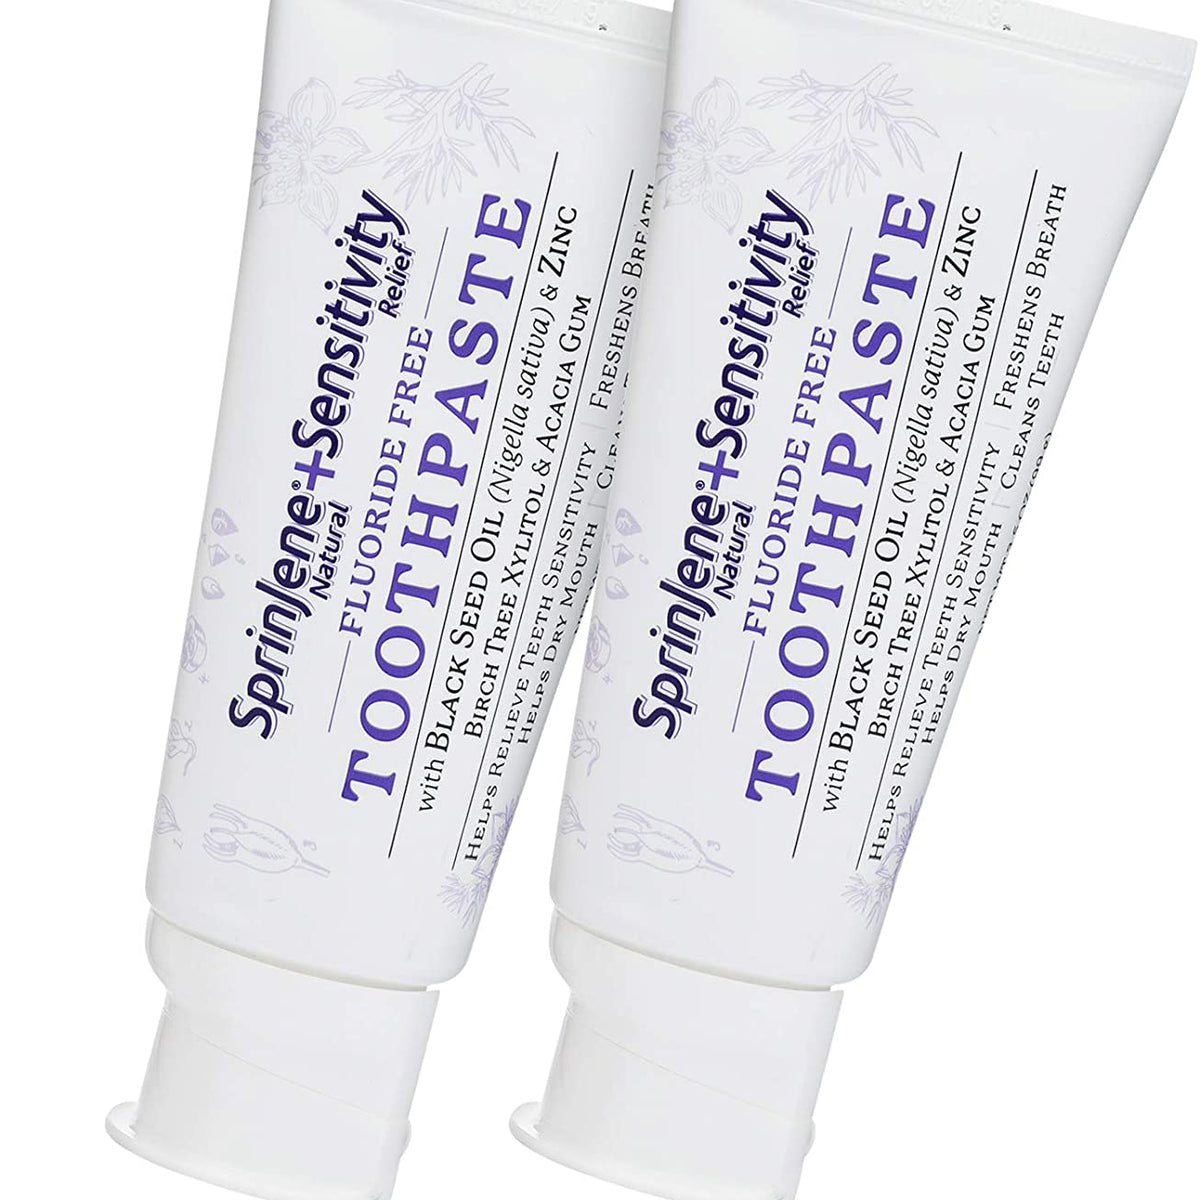 Sensitivity Relief Fluoride Free Toothpaste by SprinJene Natural® 3.5oz